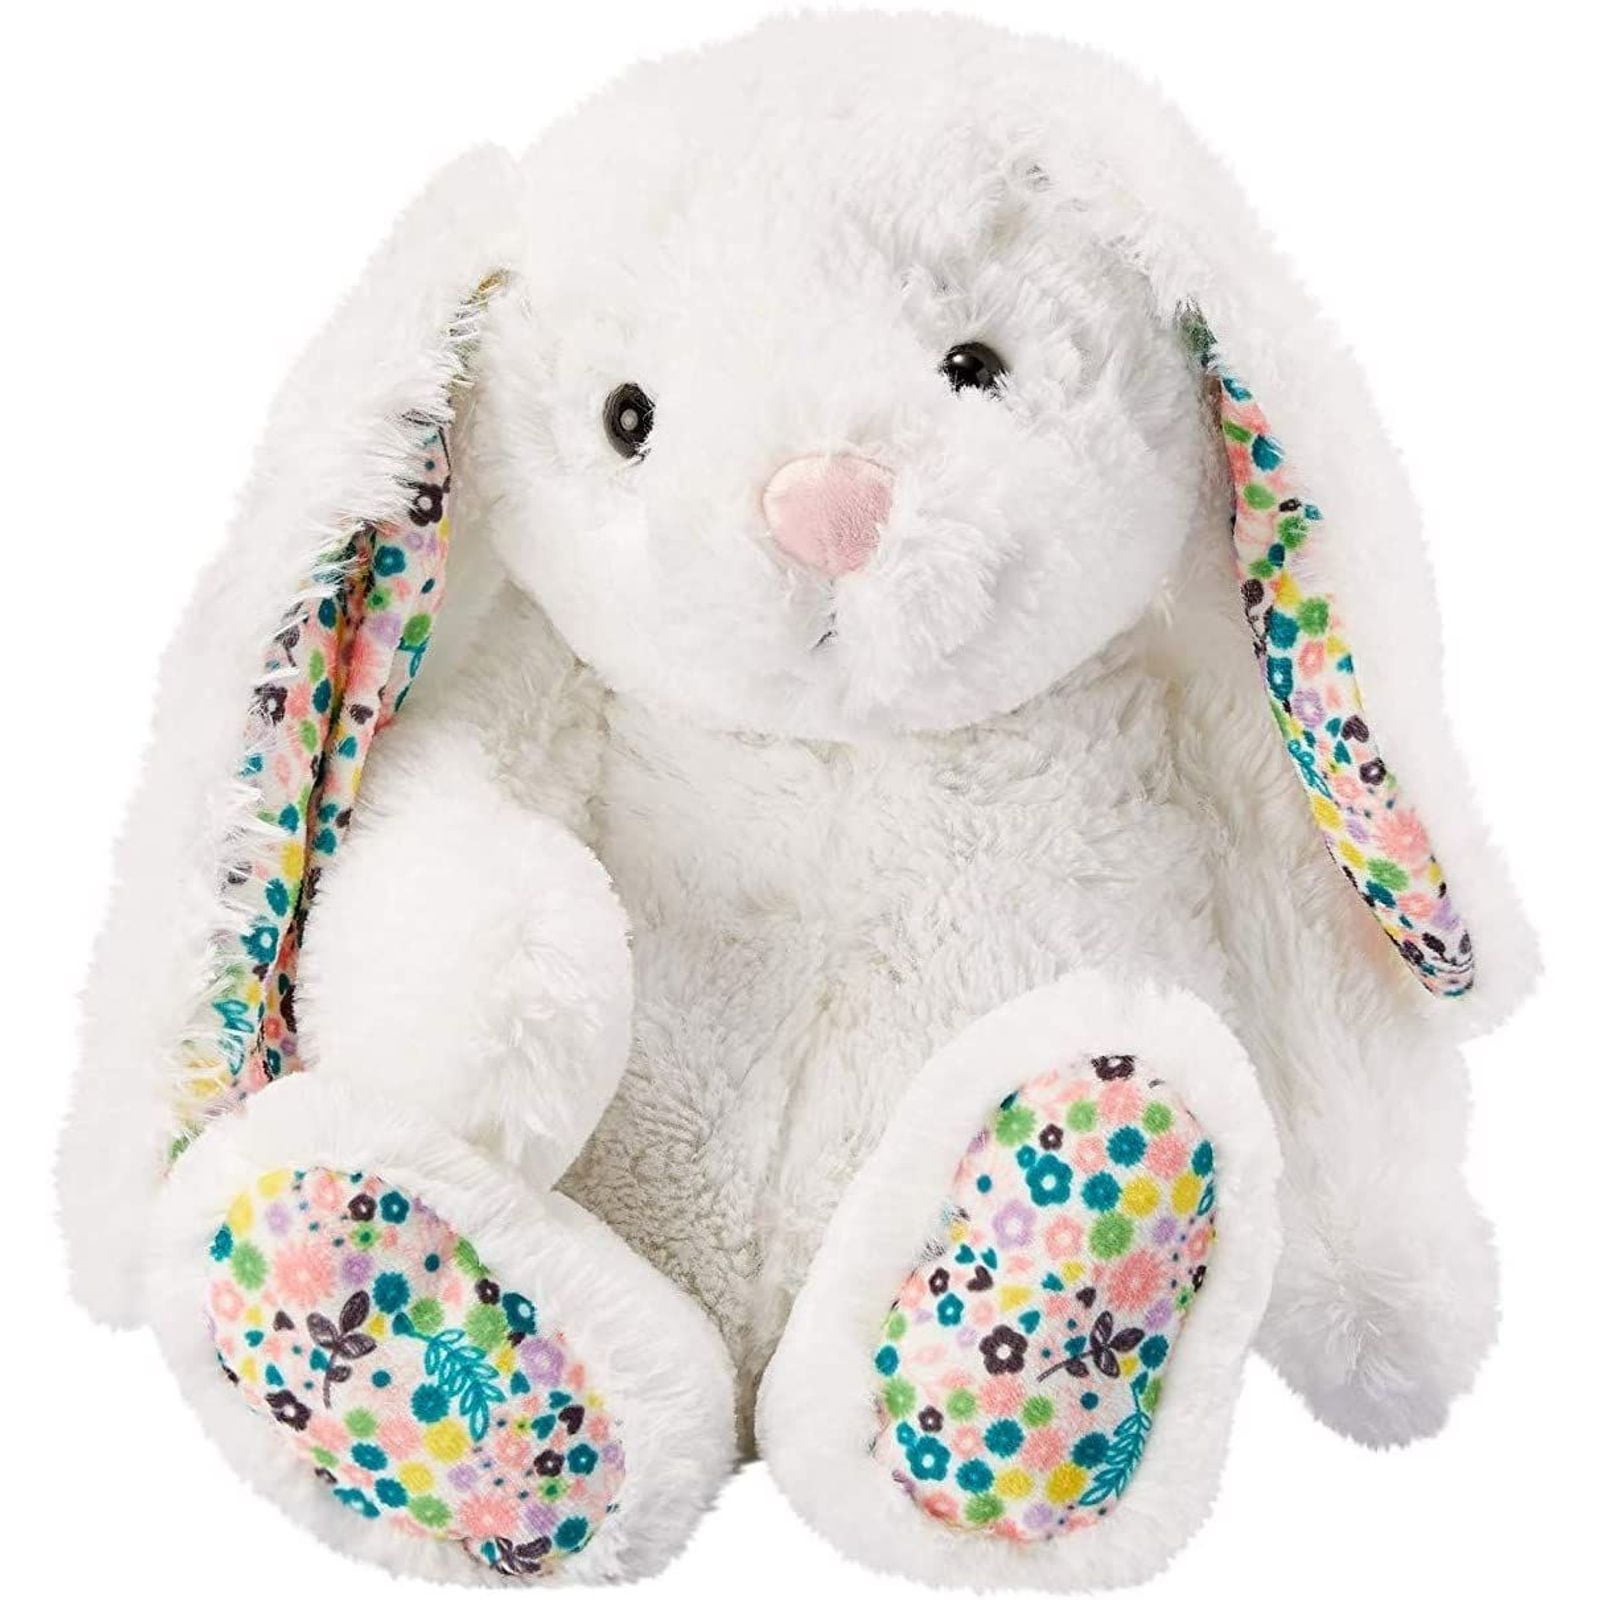 White Stuffed Bunny Toys Plush Rabbit Dolls for Kid Girl Boy Christmas Gift 7'' 